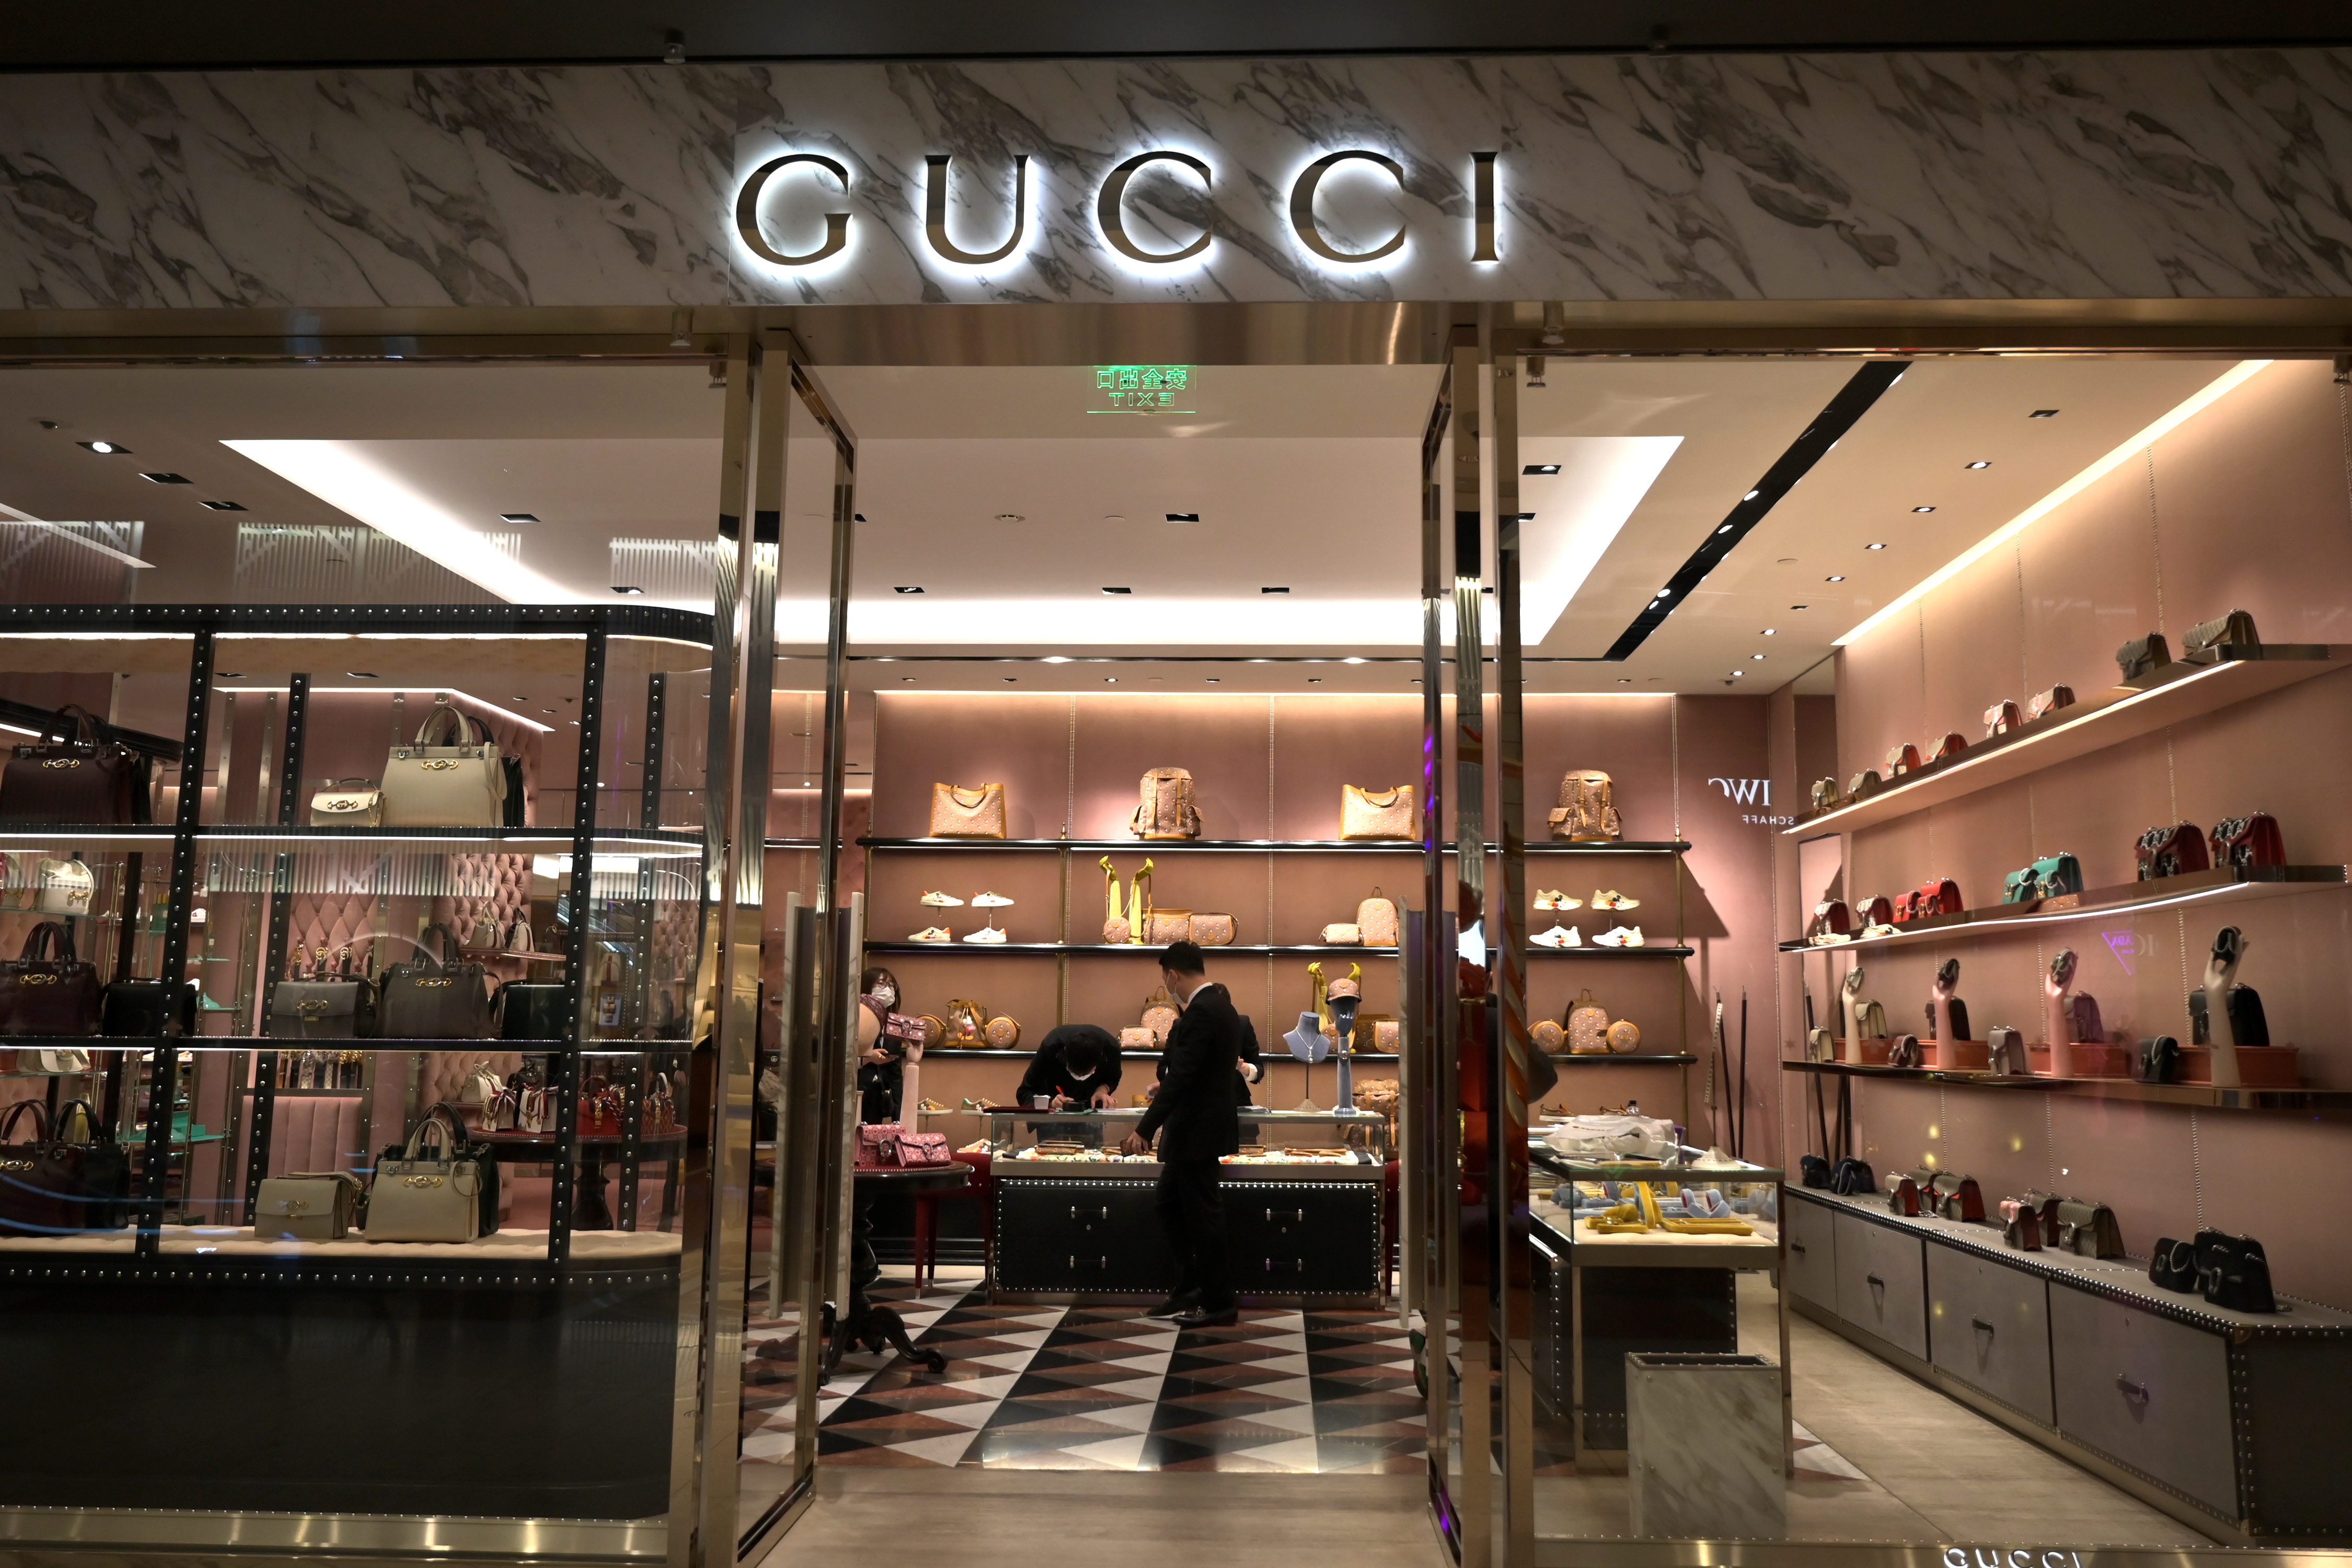 New Window Designs for Gucci